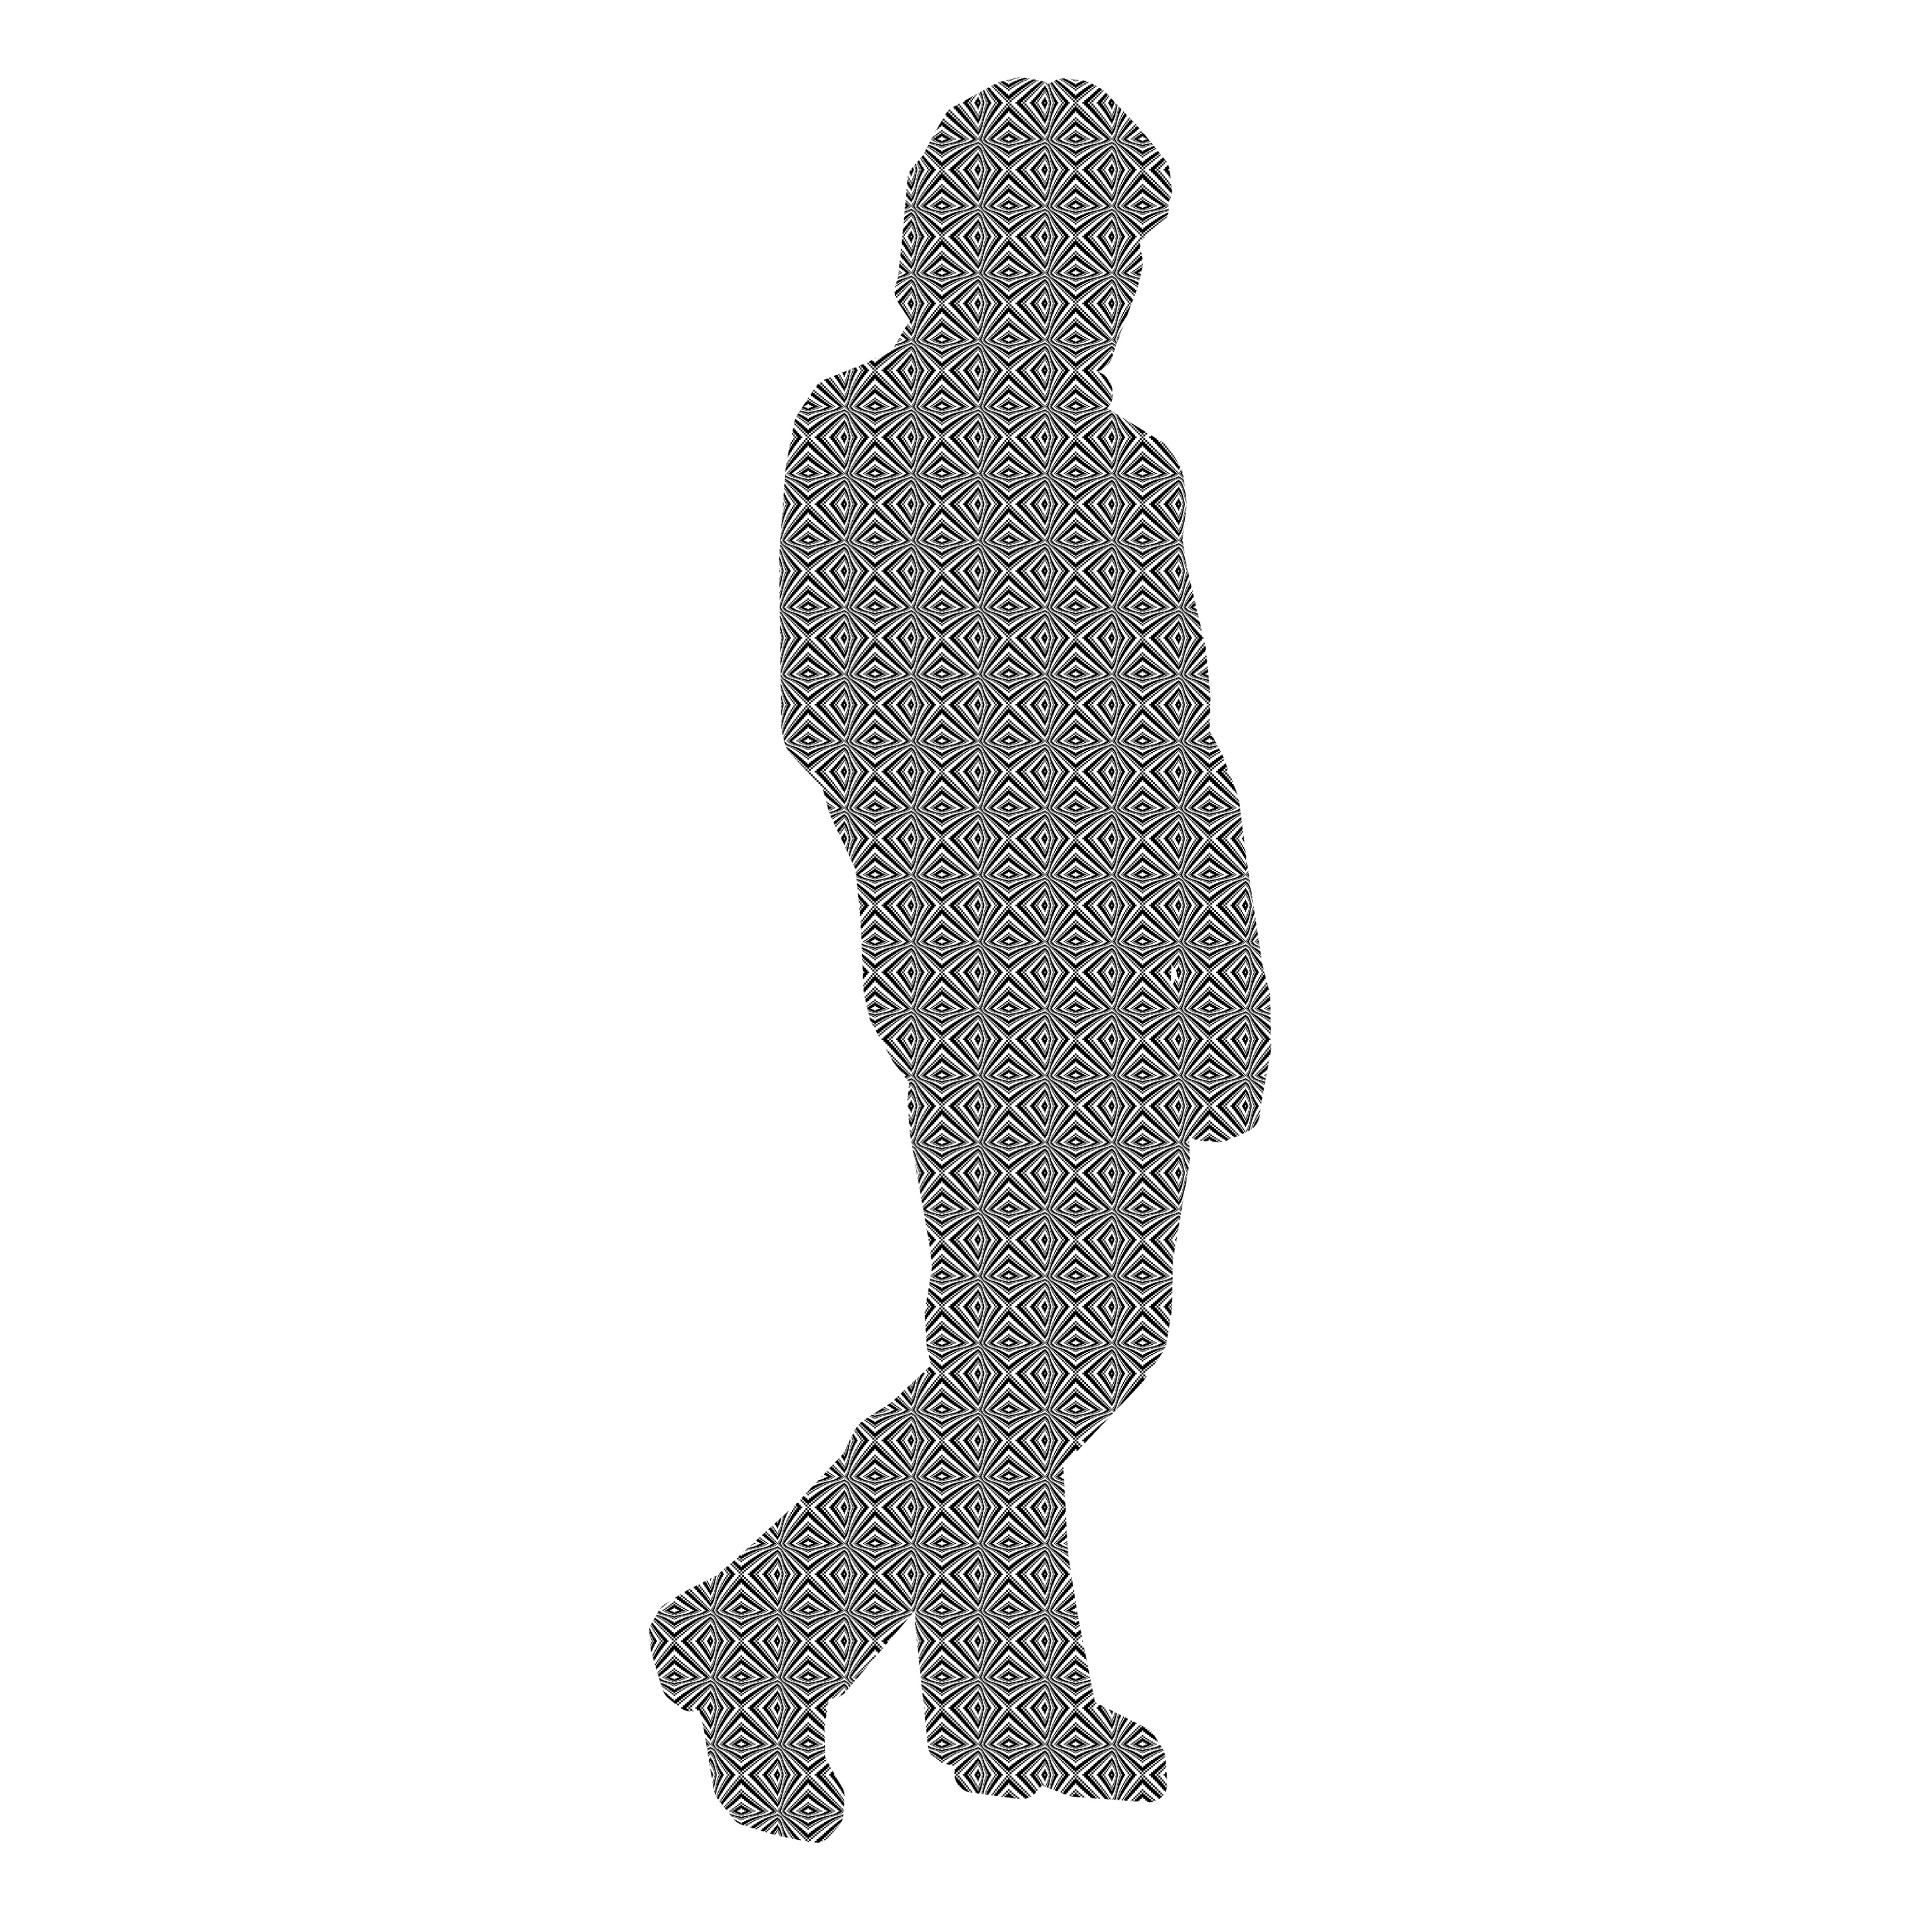 man walking silhouette free photo